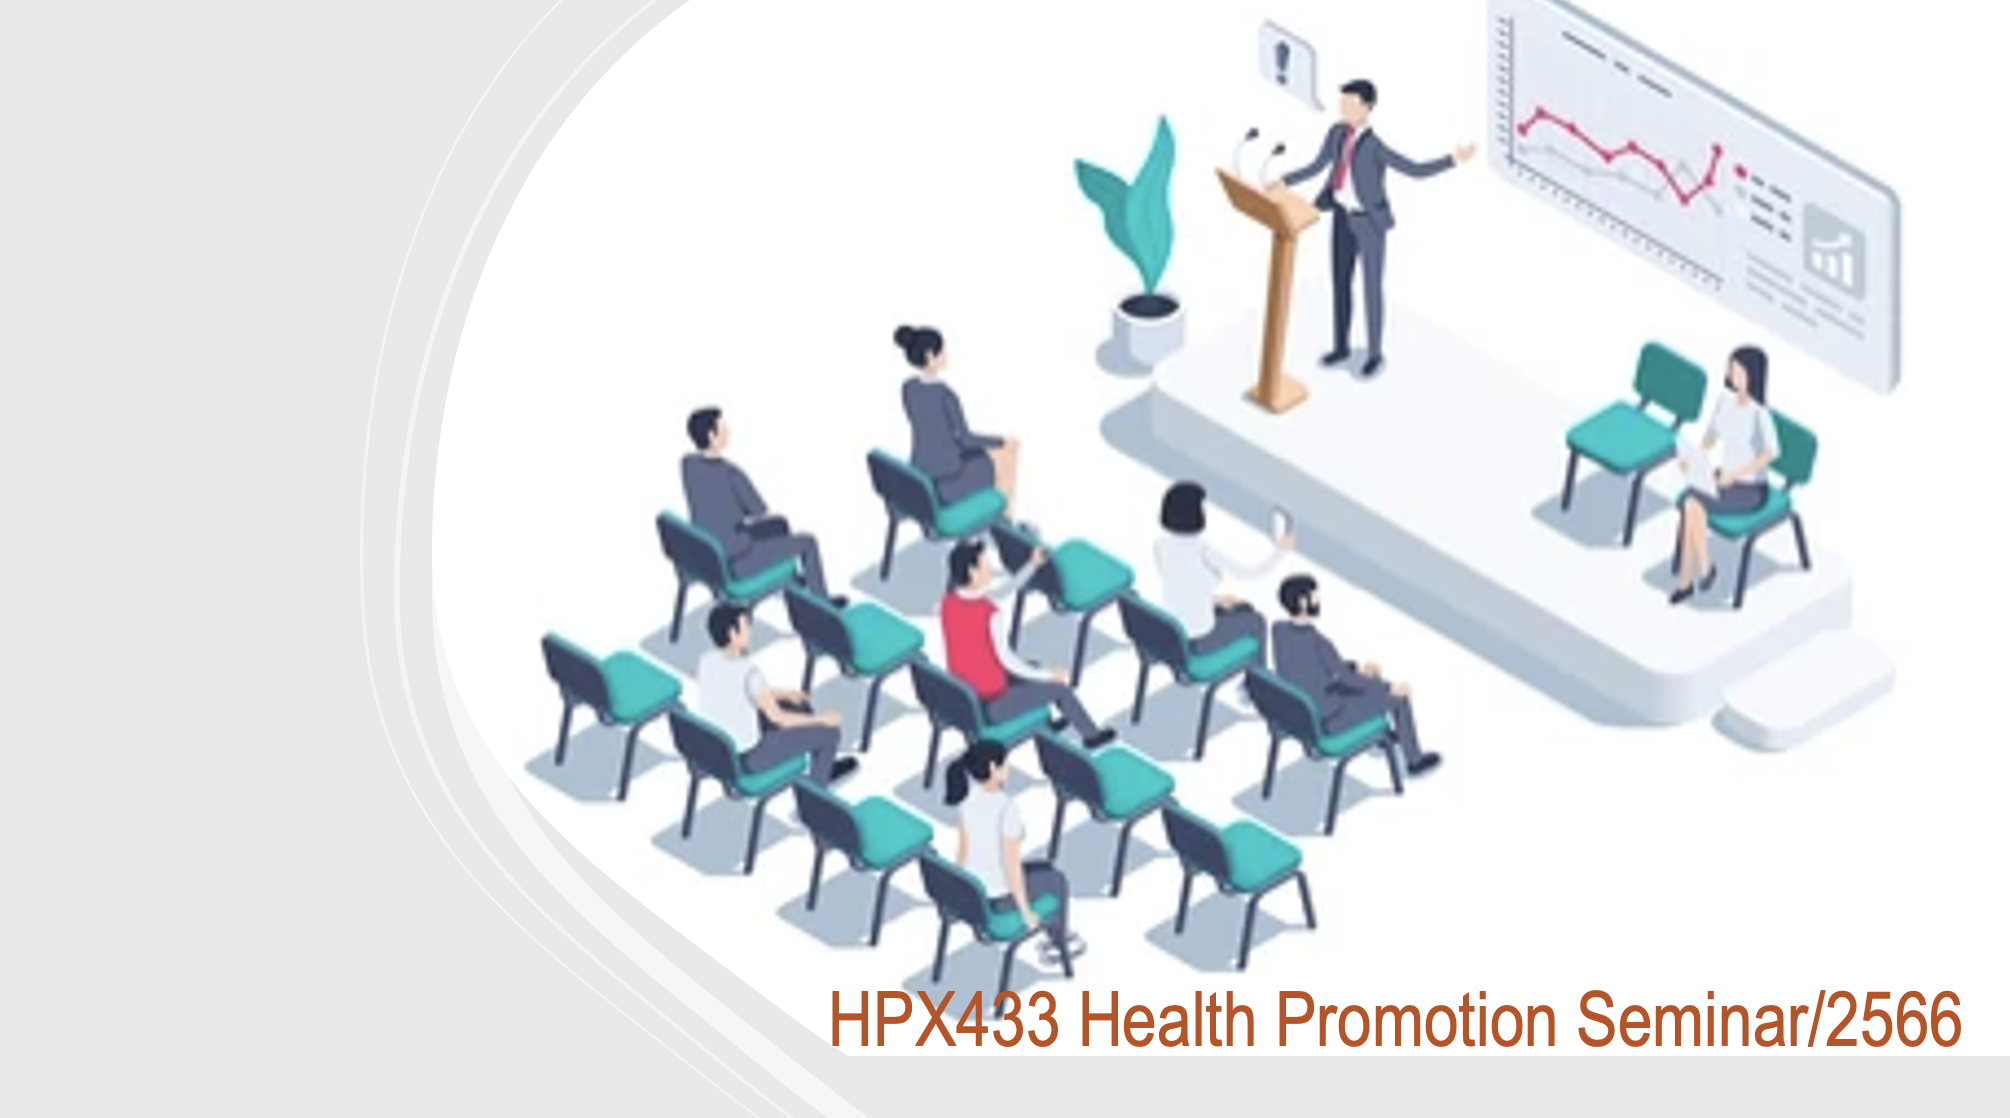 HPX433 Health Promotion Seminar/2566